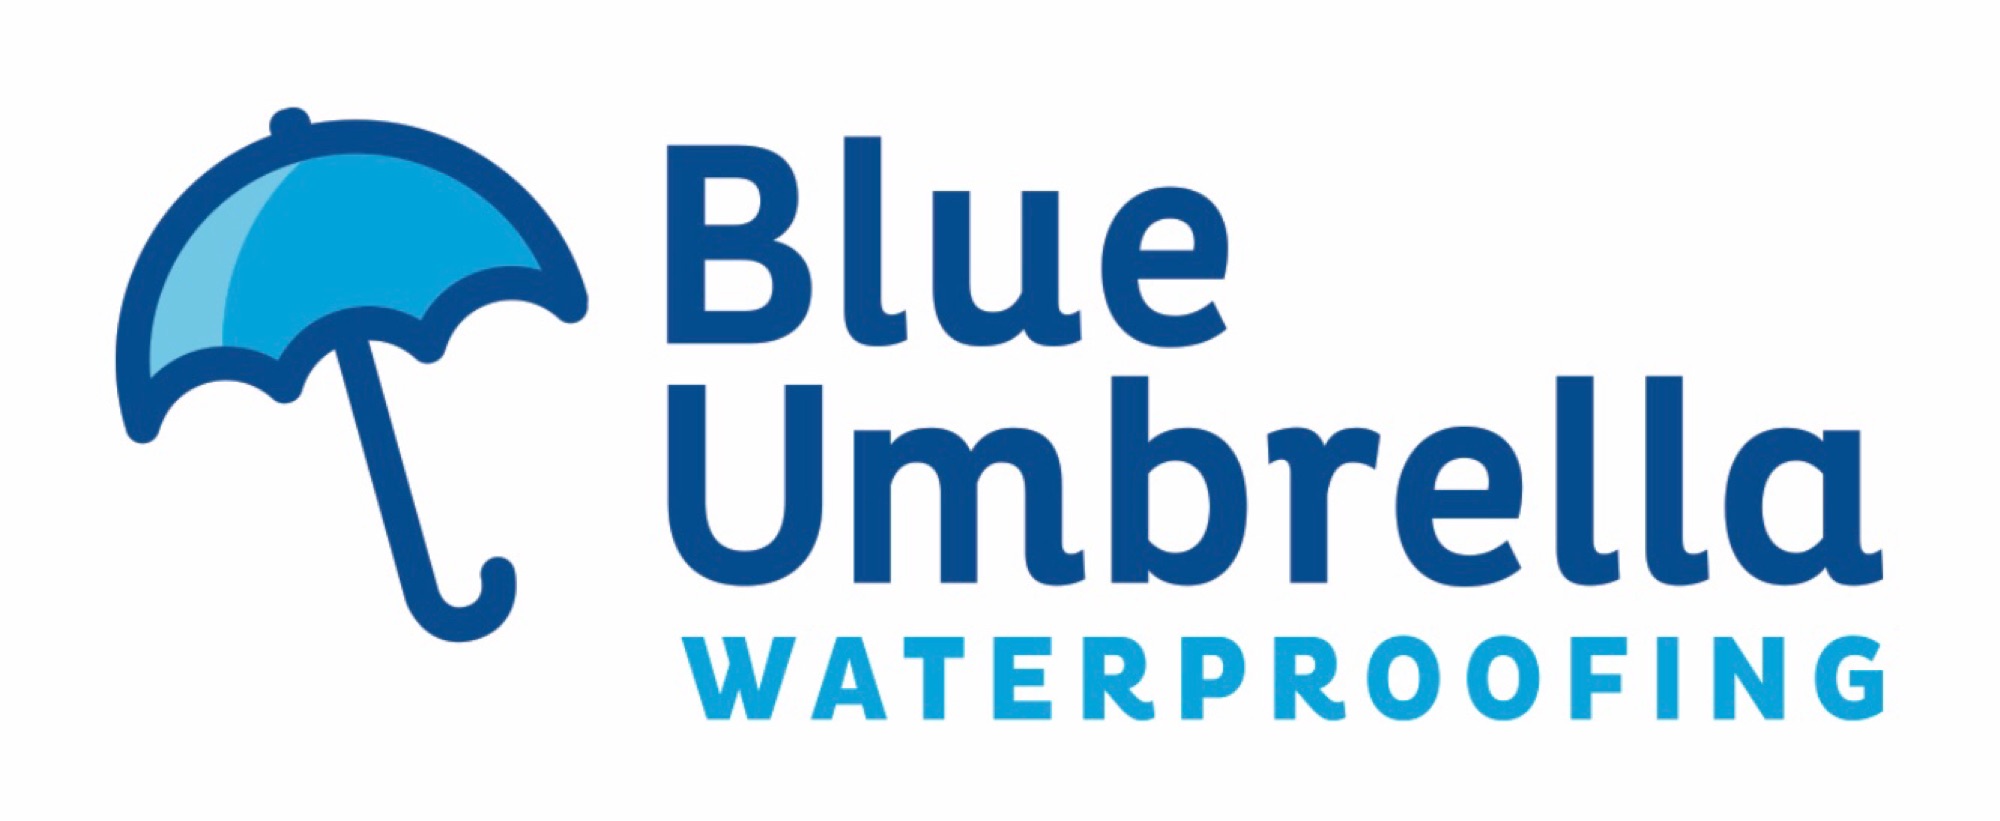 Blue Umbrella Waterproofing, LLC Logo